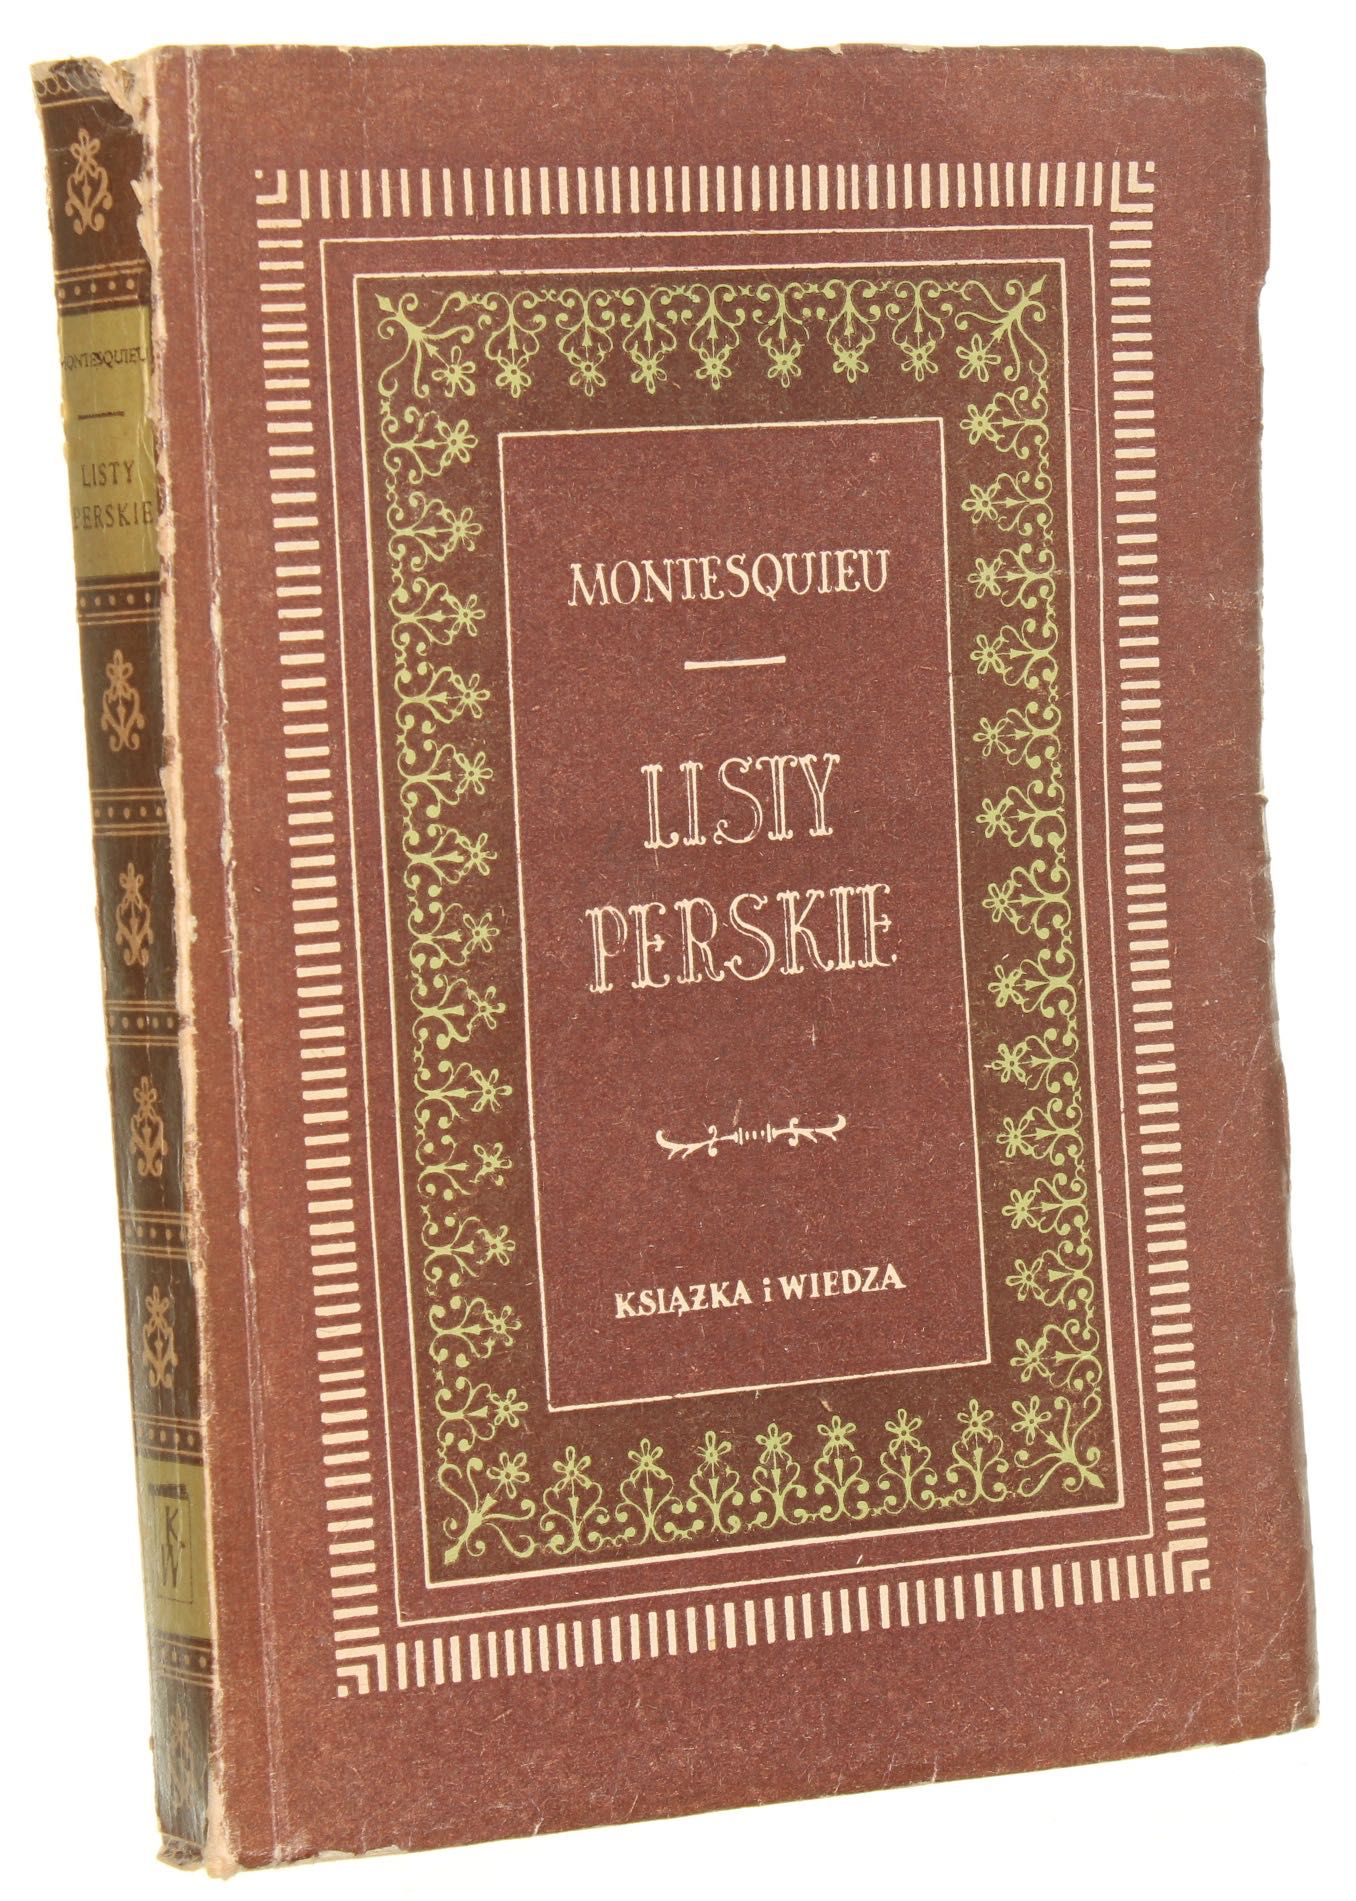 Listy Perskie Montesquieu [1951]